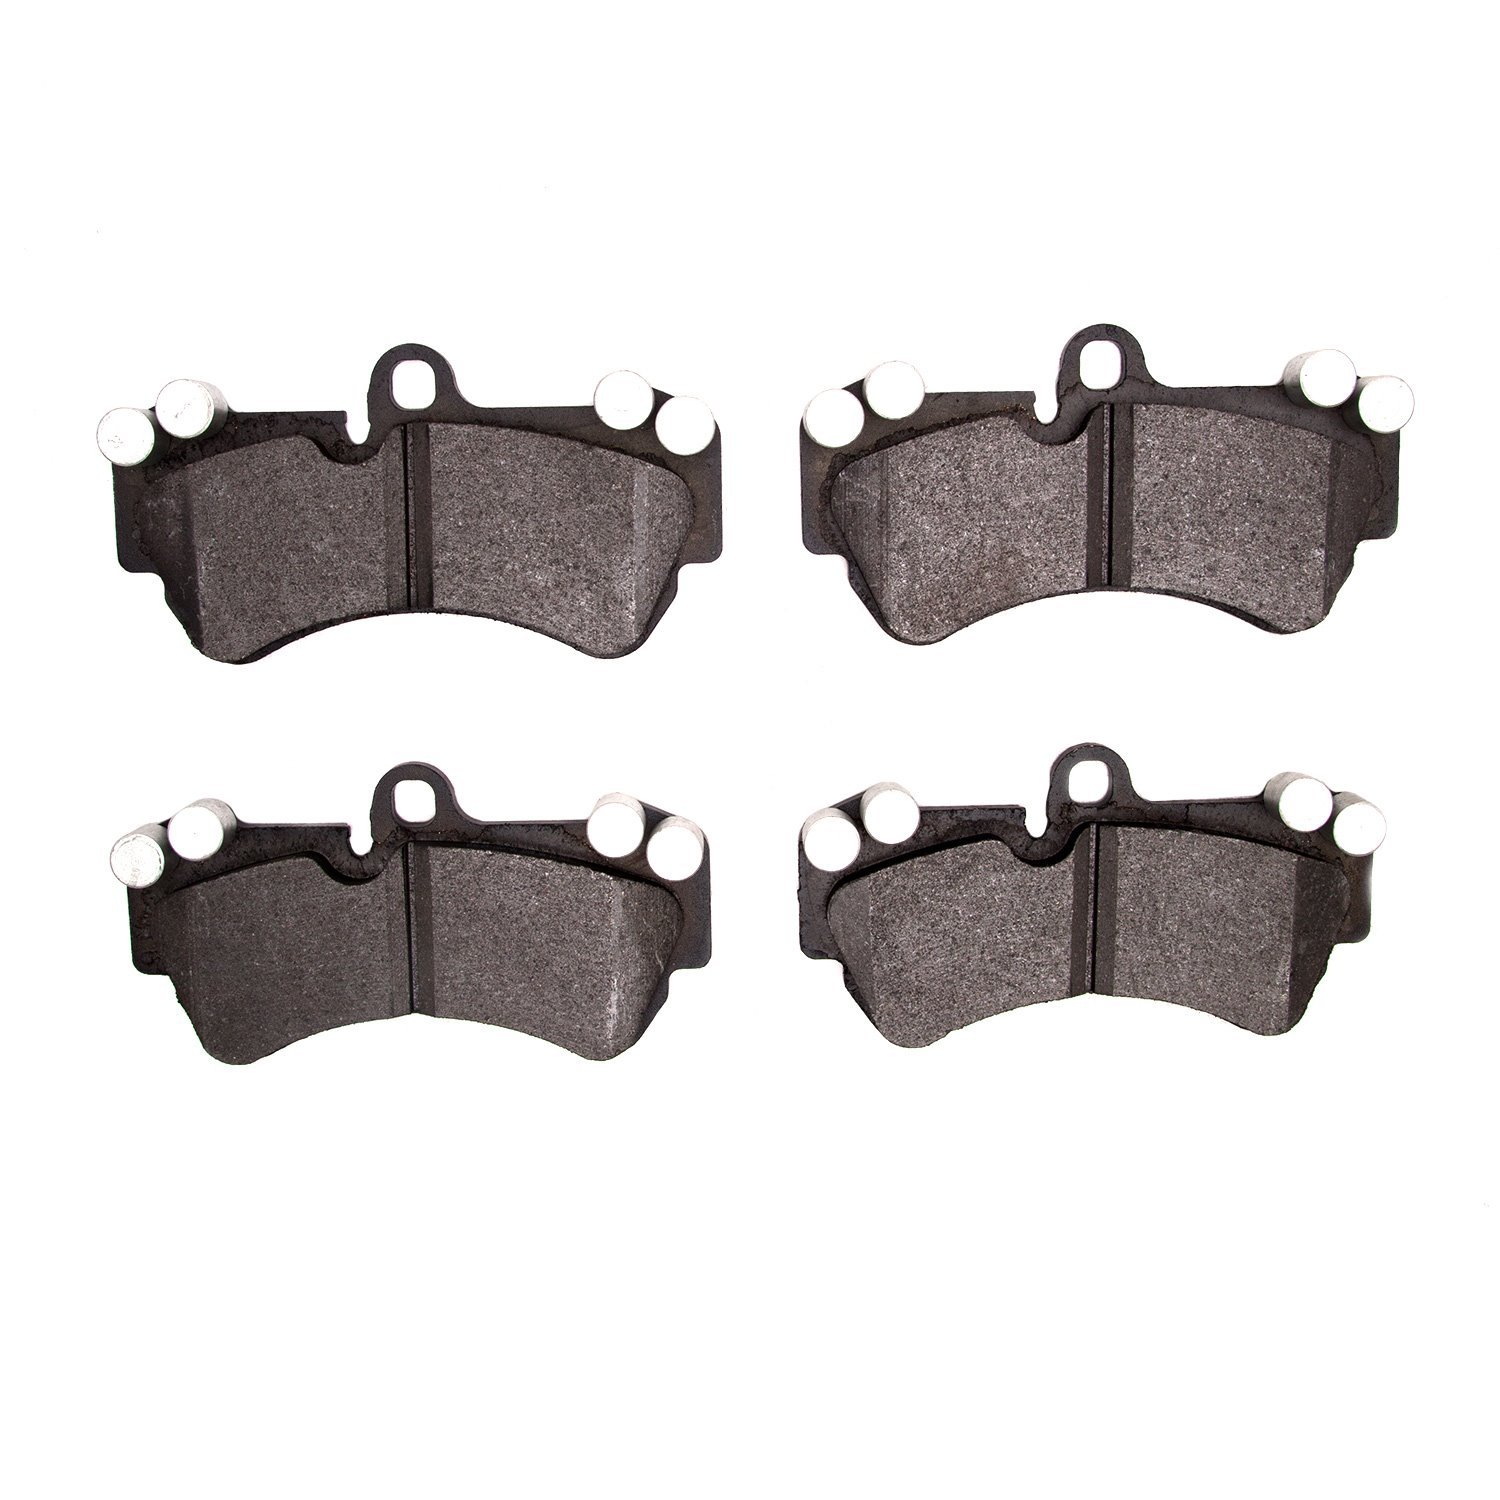 Semi-Metallic Brake Pads, 2003-2018 Fits Multiple Makes/Models, Position: Front